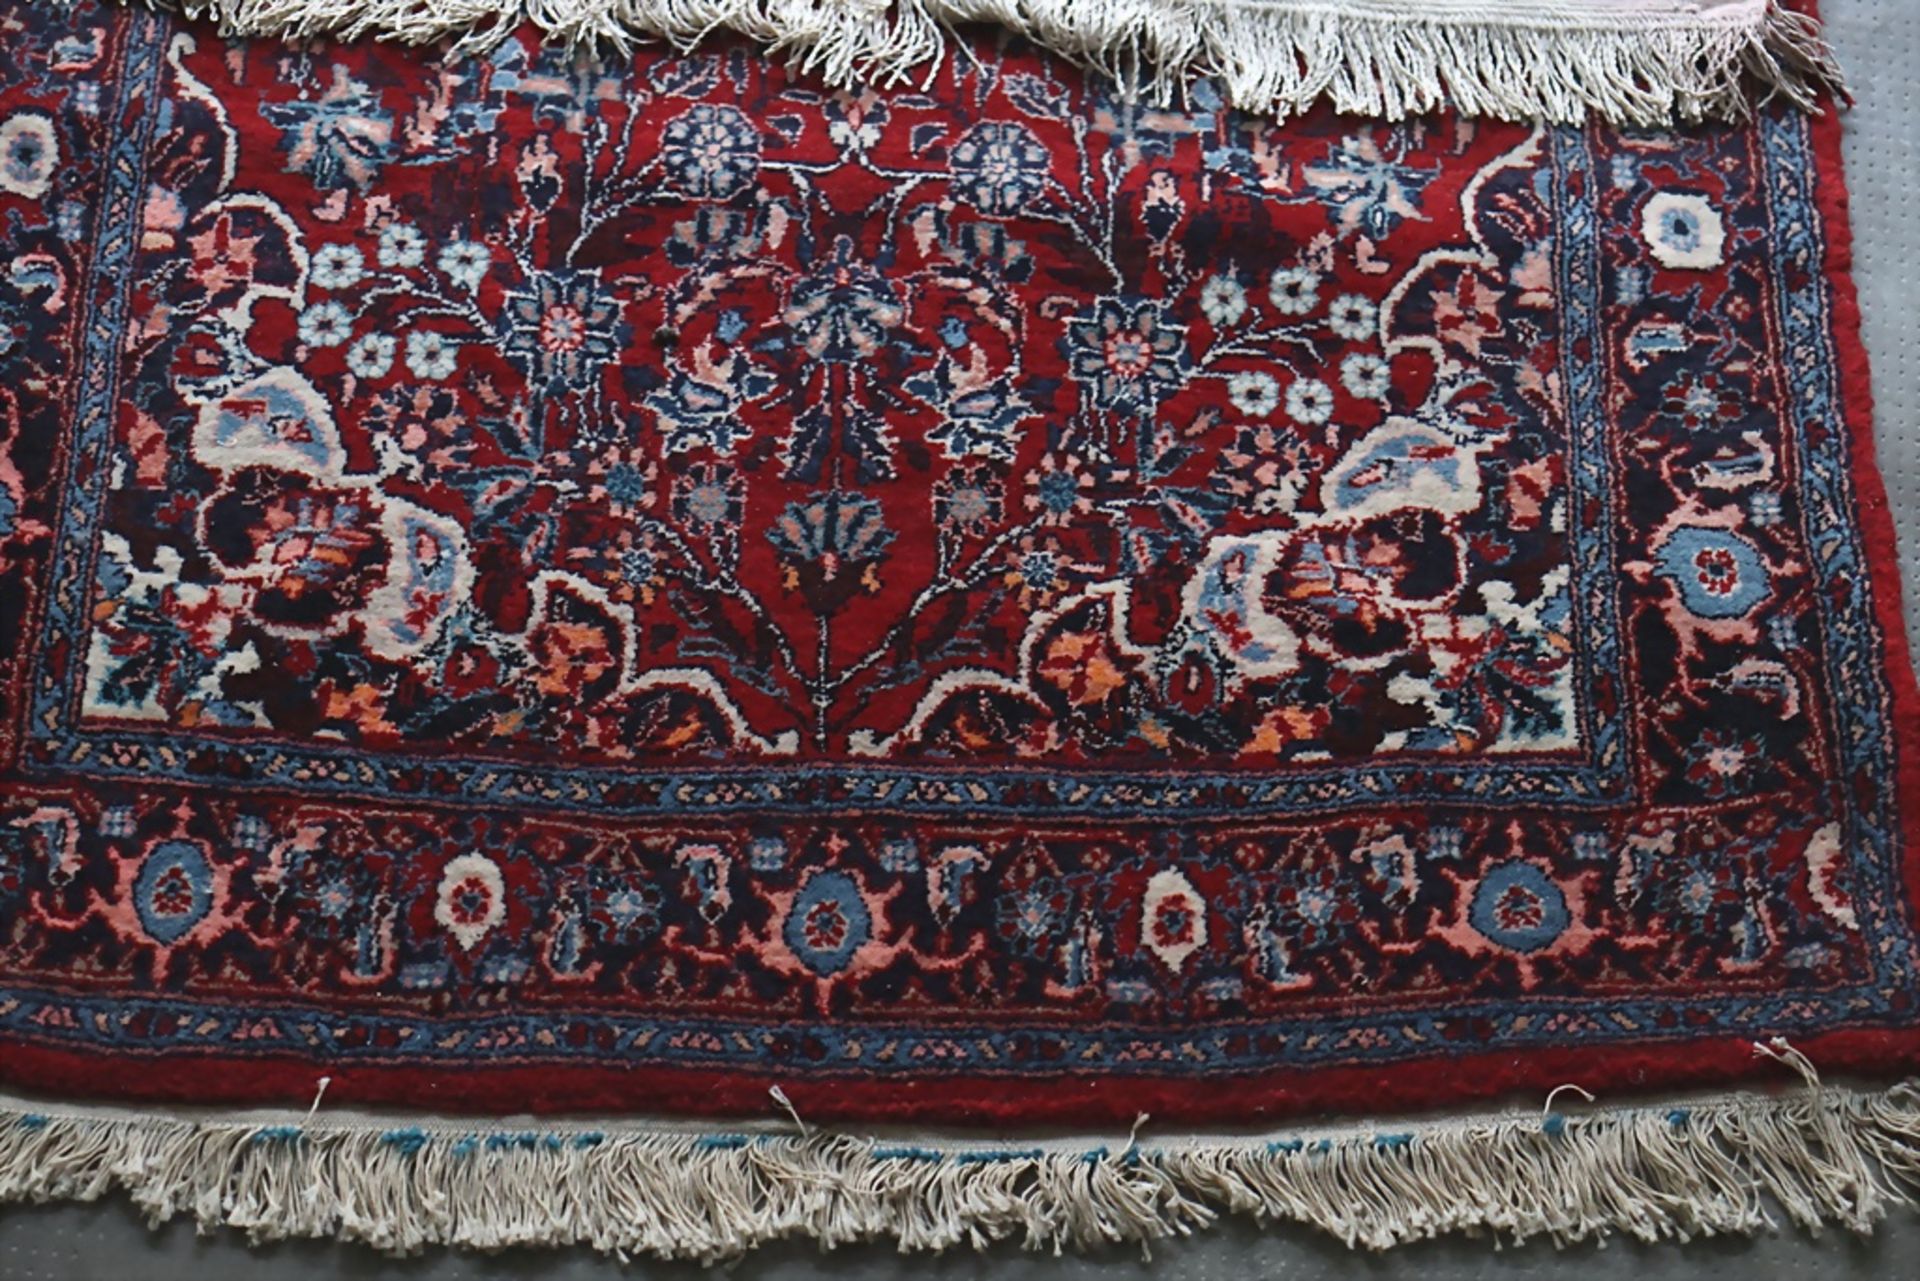 Teppich / A carpet - Image 2 of 3